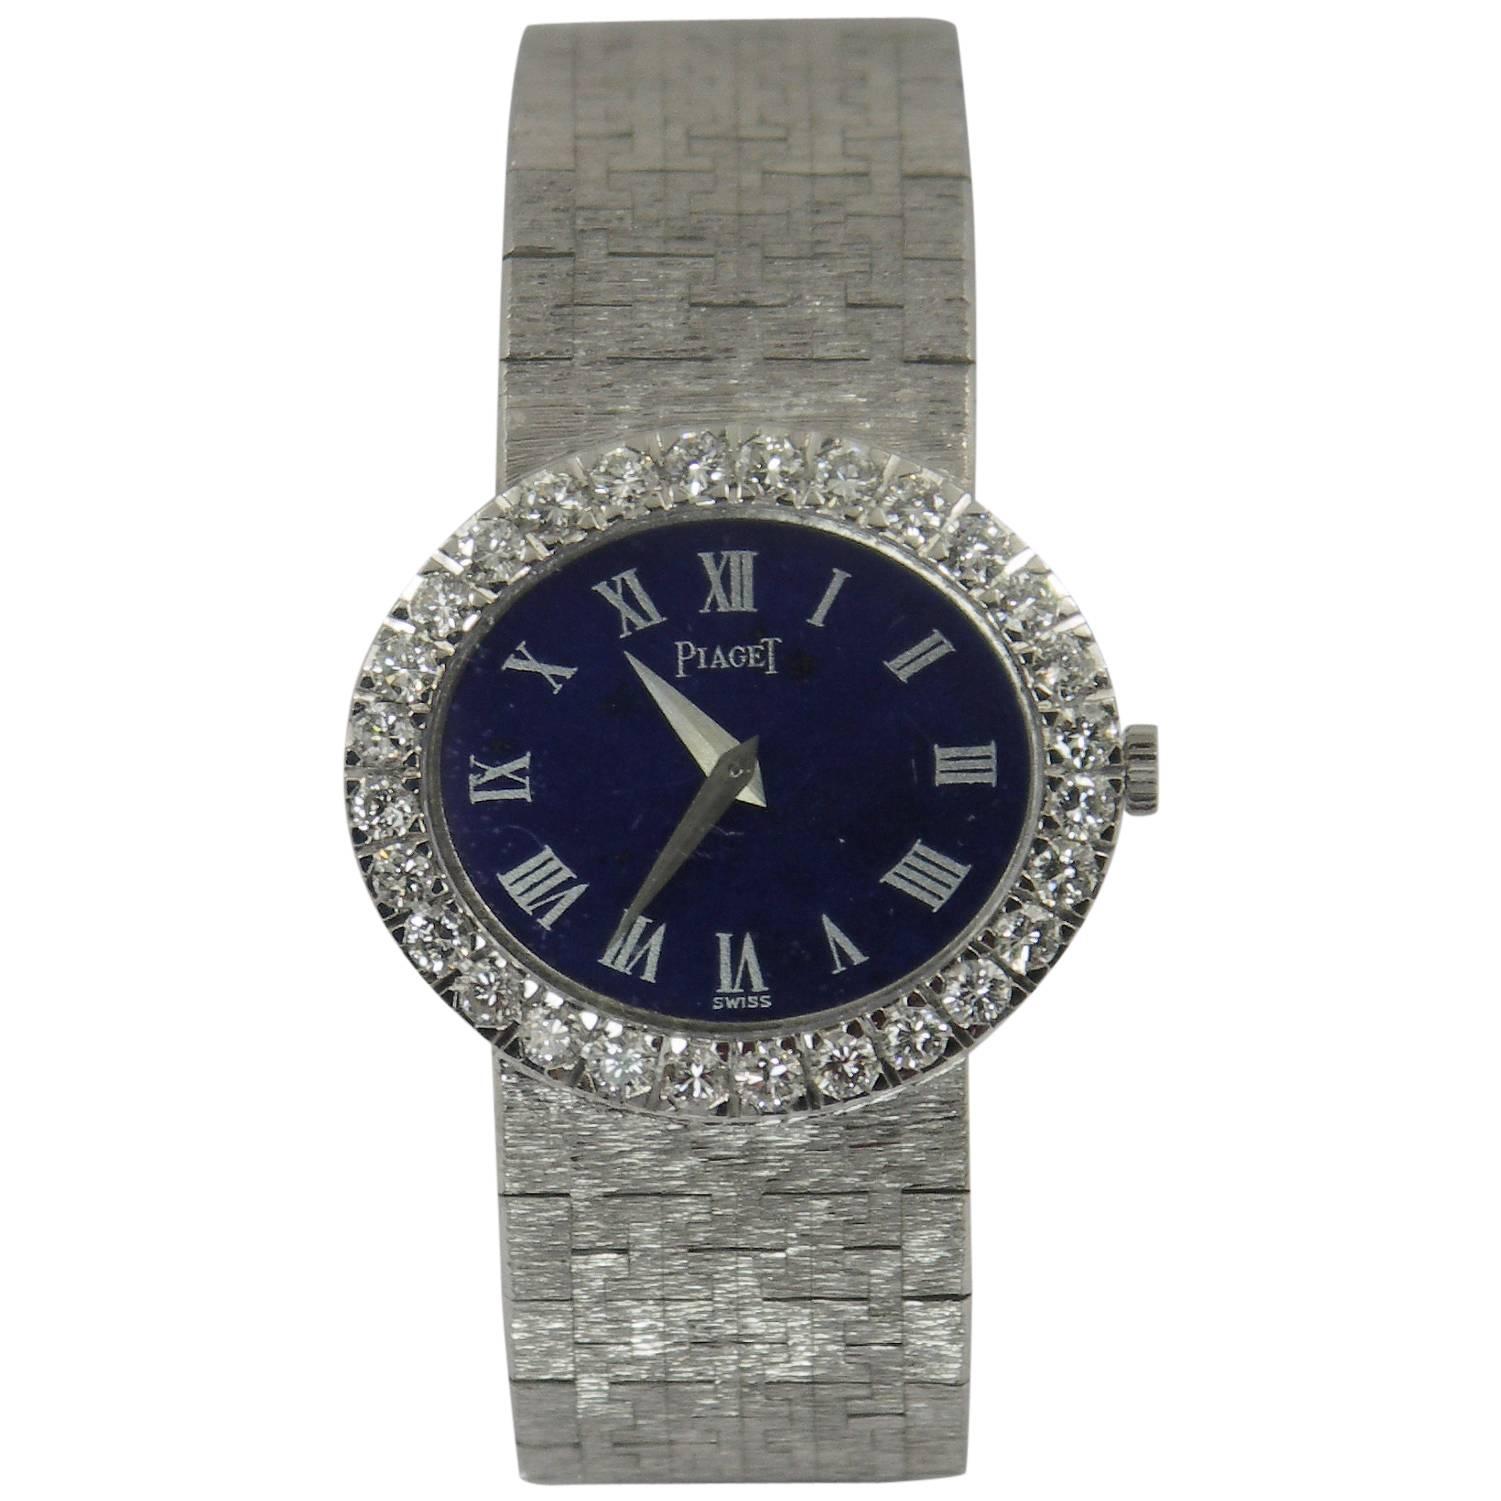 Piaget Ladies White Gold Diamond Lapis Dial Roman Numeral Watch/Wristwatch